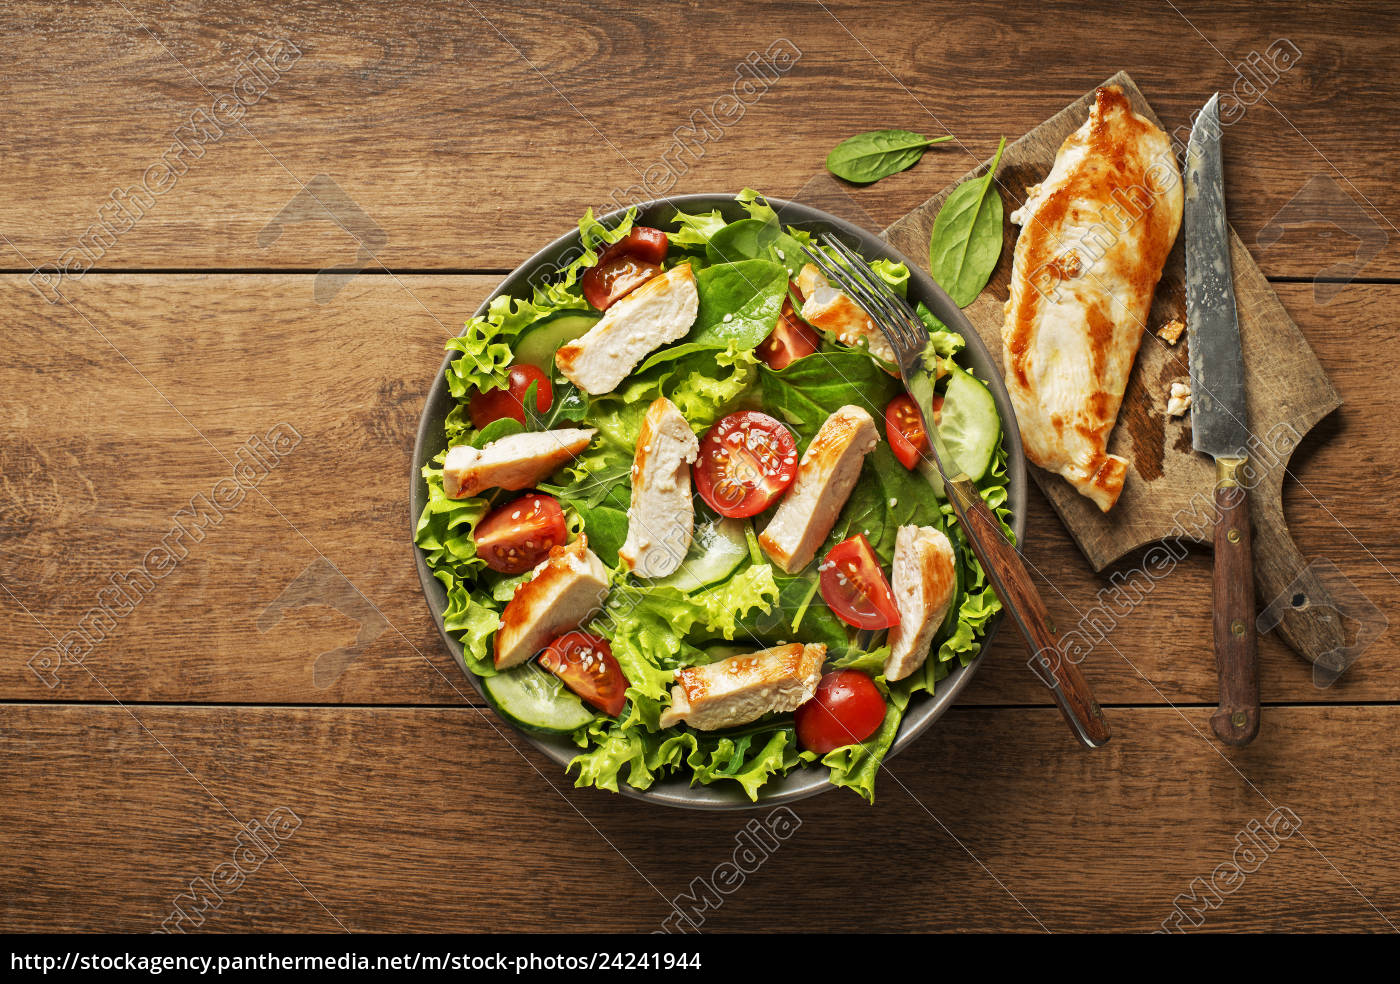 salat mit huhn - Lizenzfreies Foto - #24241944 | Bildagentur PantherMedia